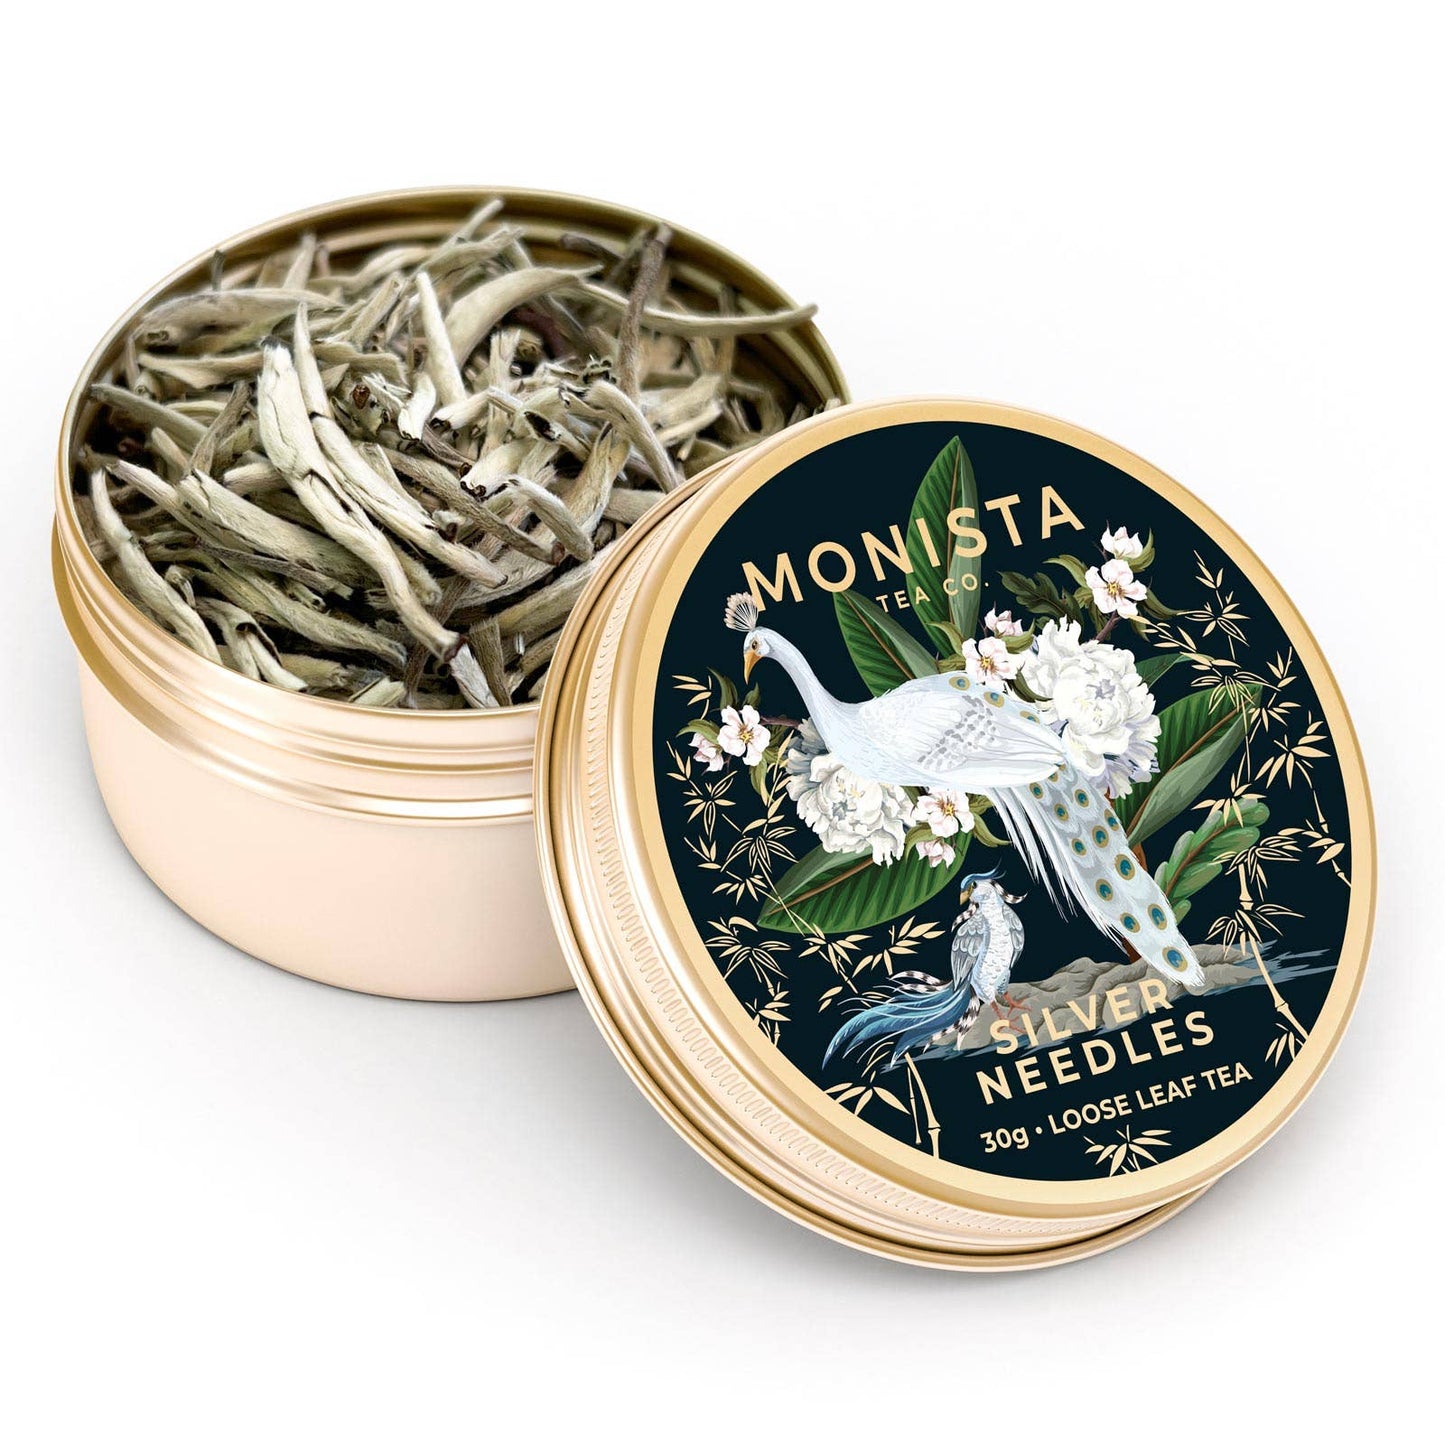 Monista Tea Co. - Silver Needles